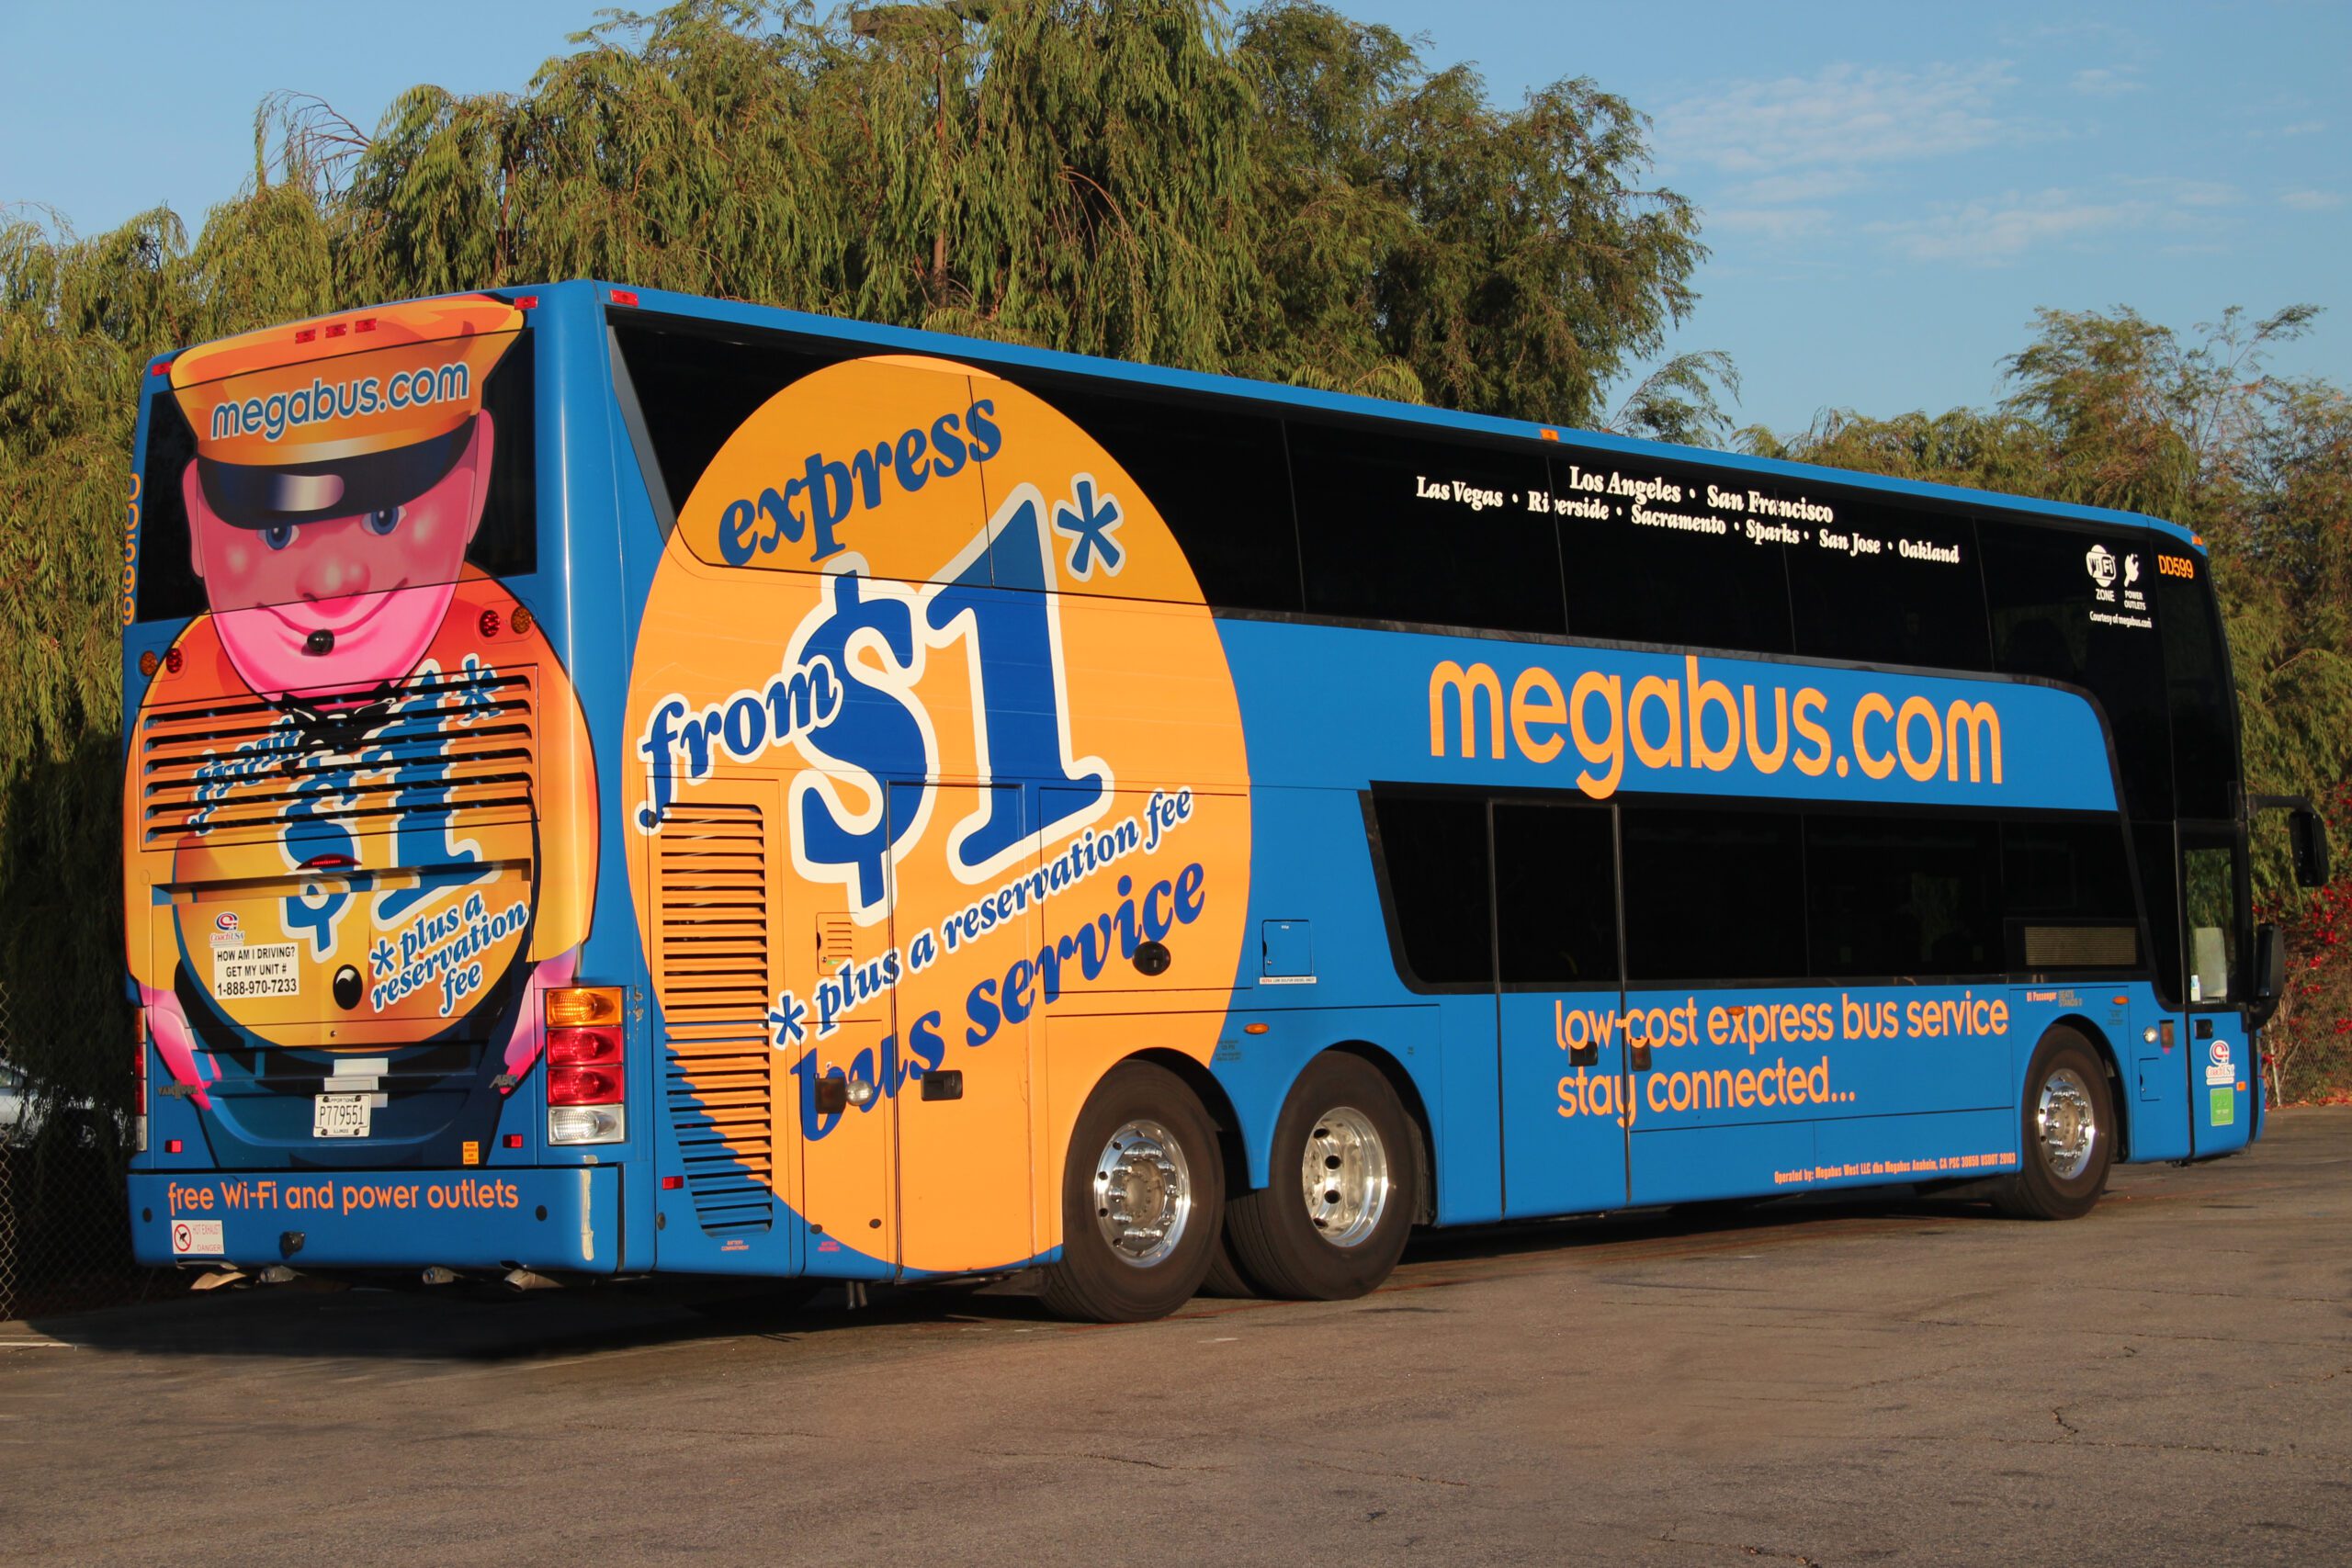 a blue and orange bus